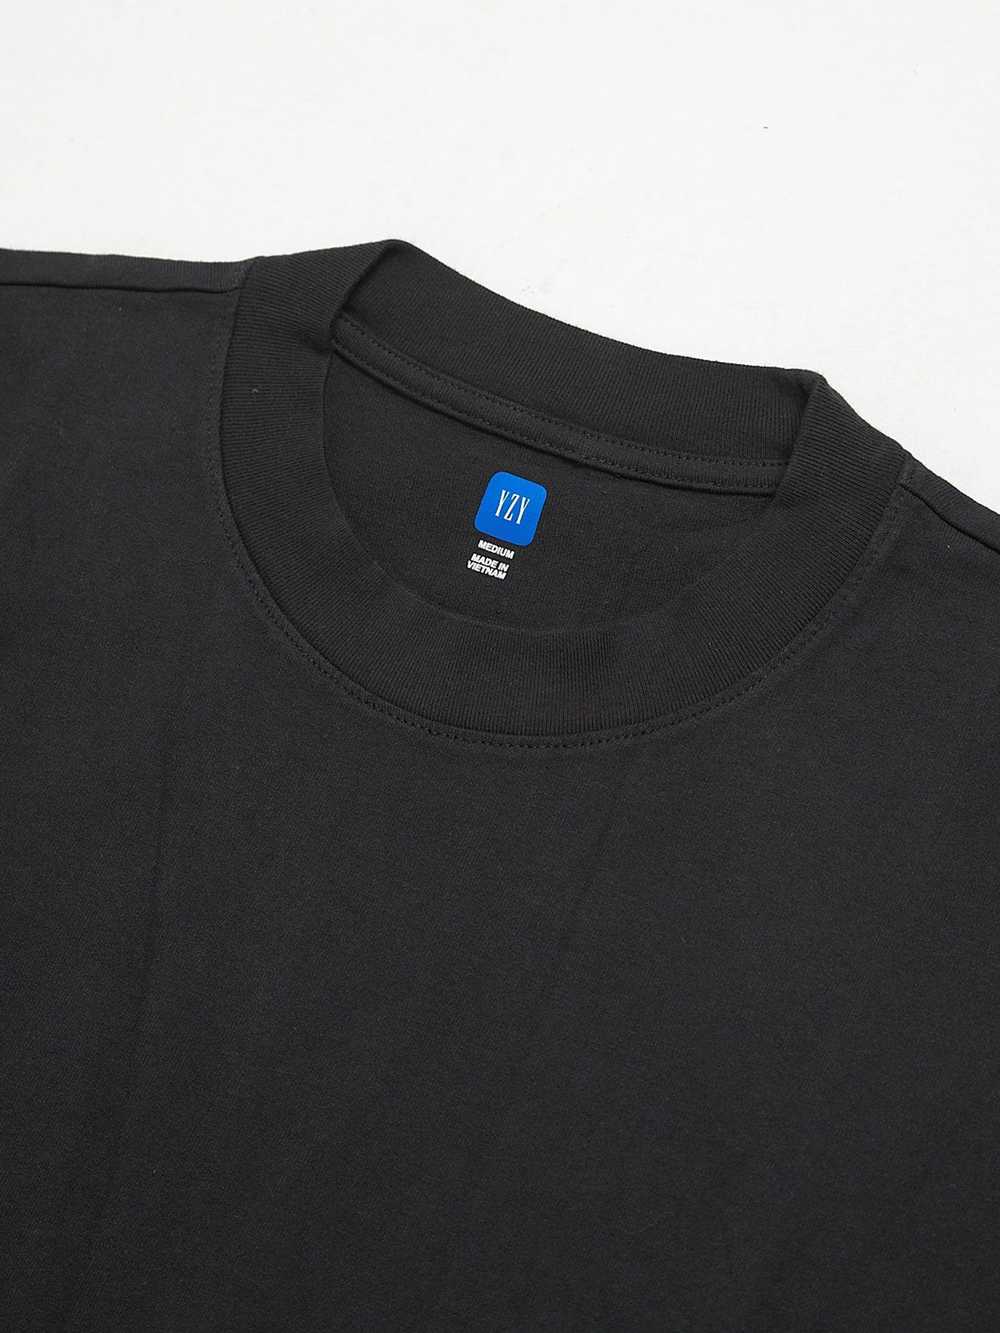 Yeezy Season Black Oversized T-Shirt - image 3